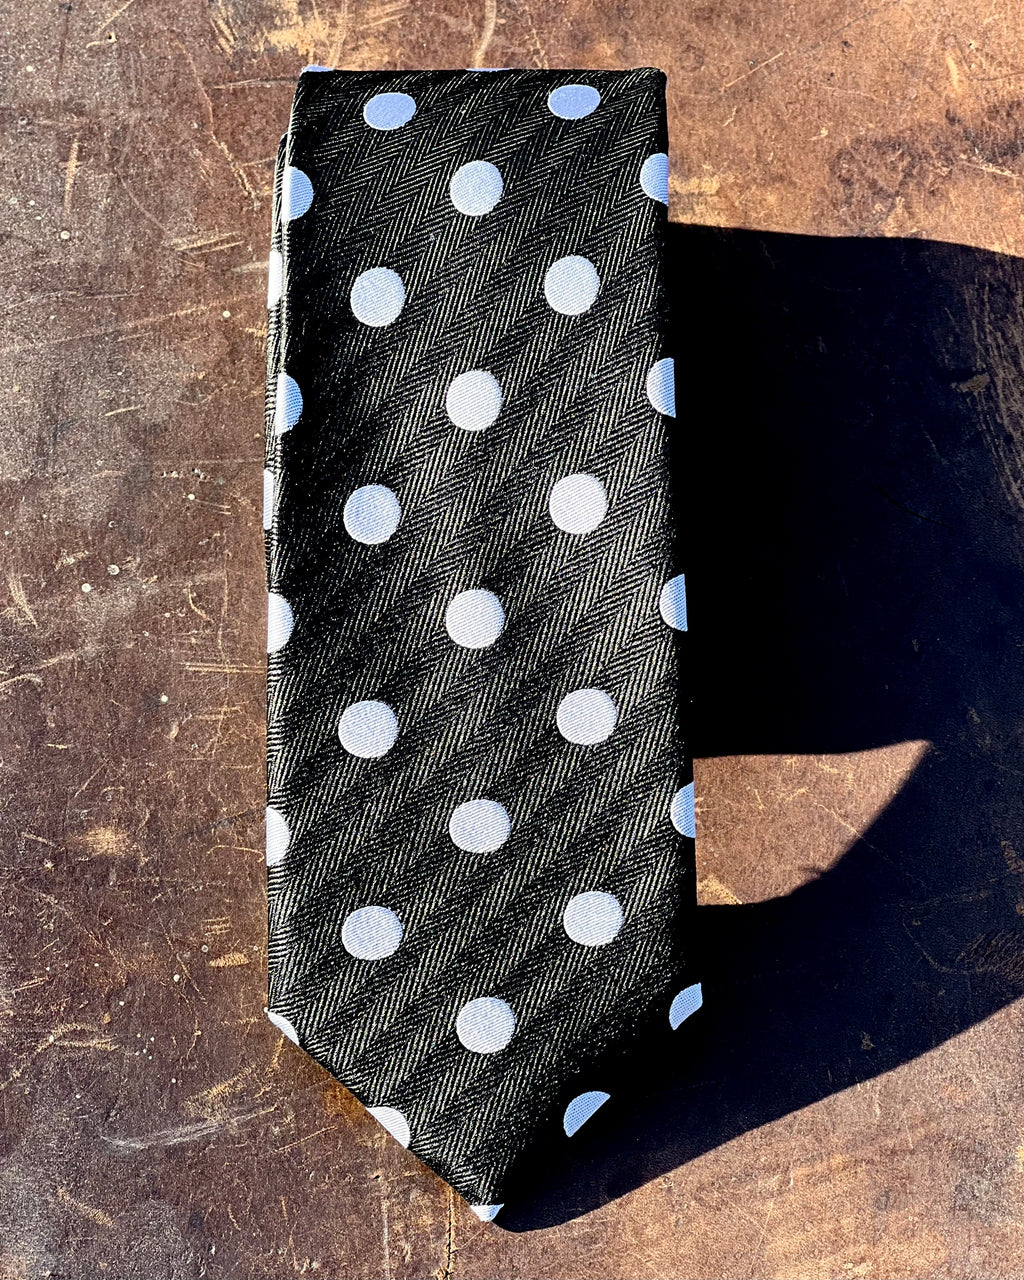 Black silk tie with white spots